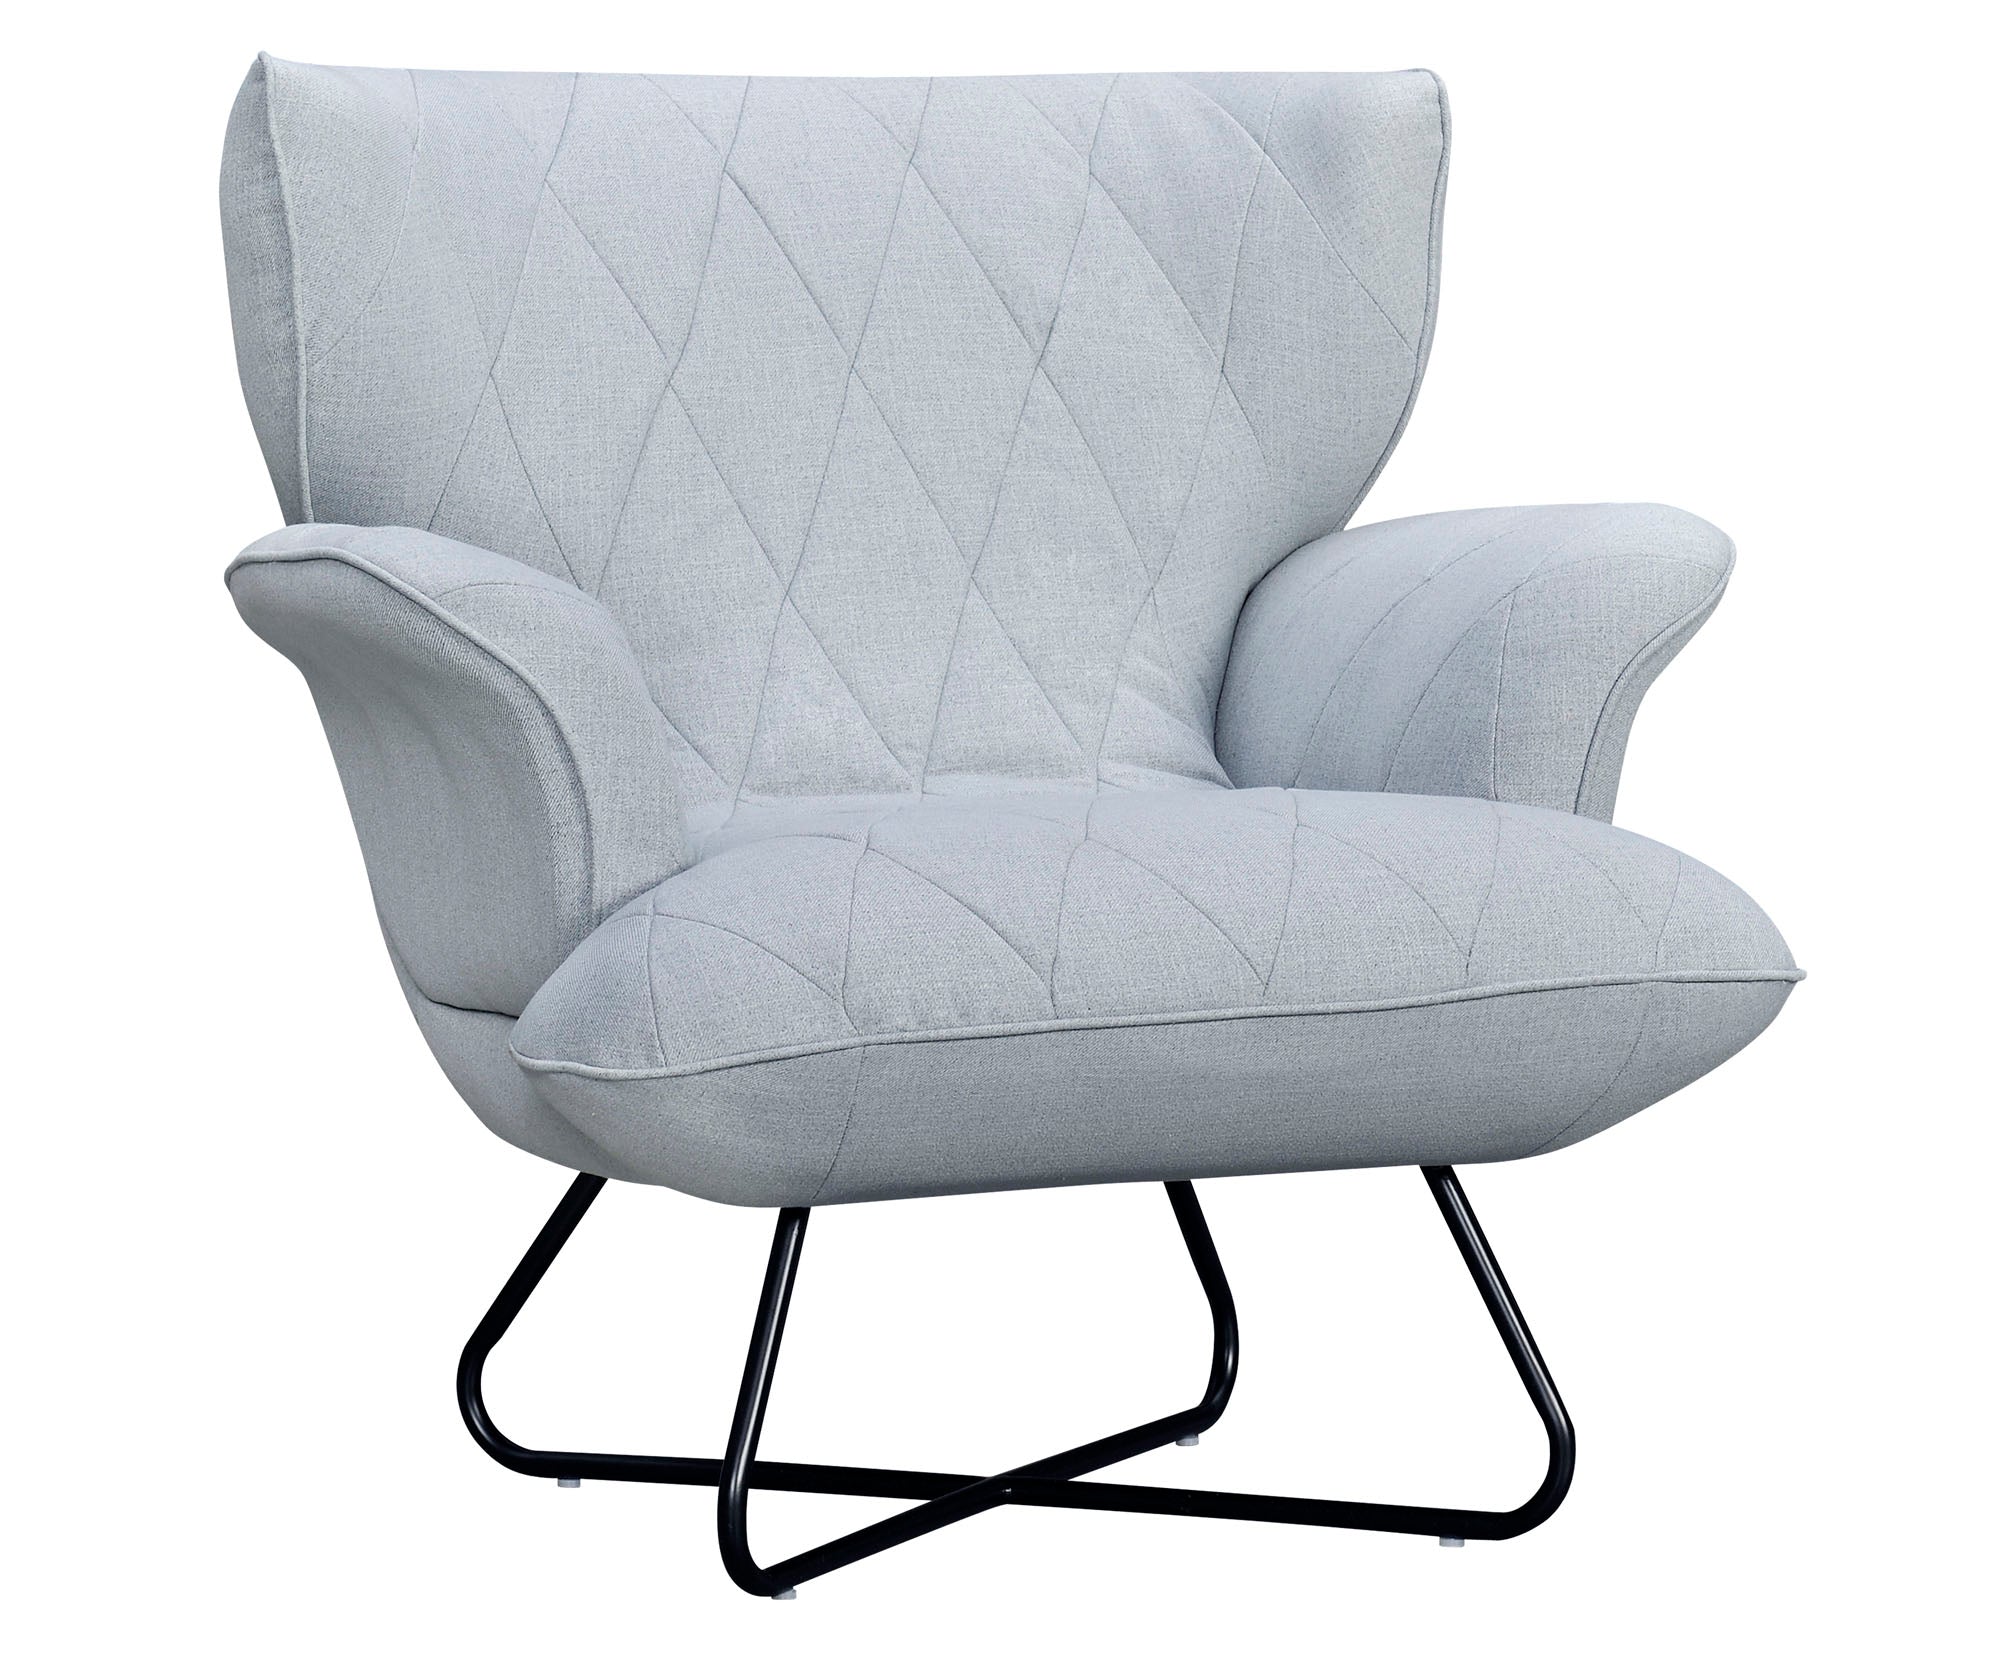 Seaglass Accent Chair - MJM Furniture